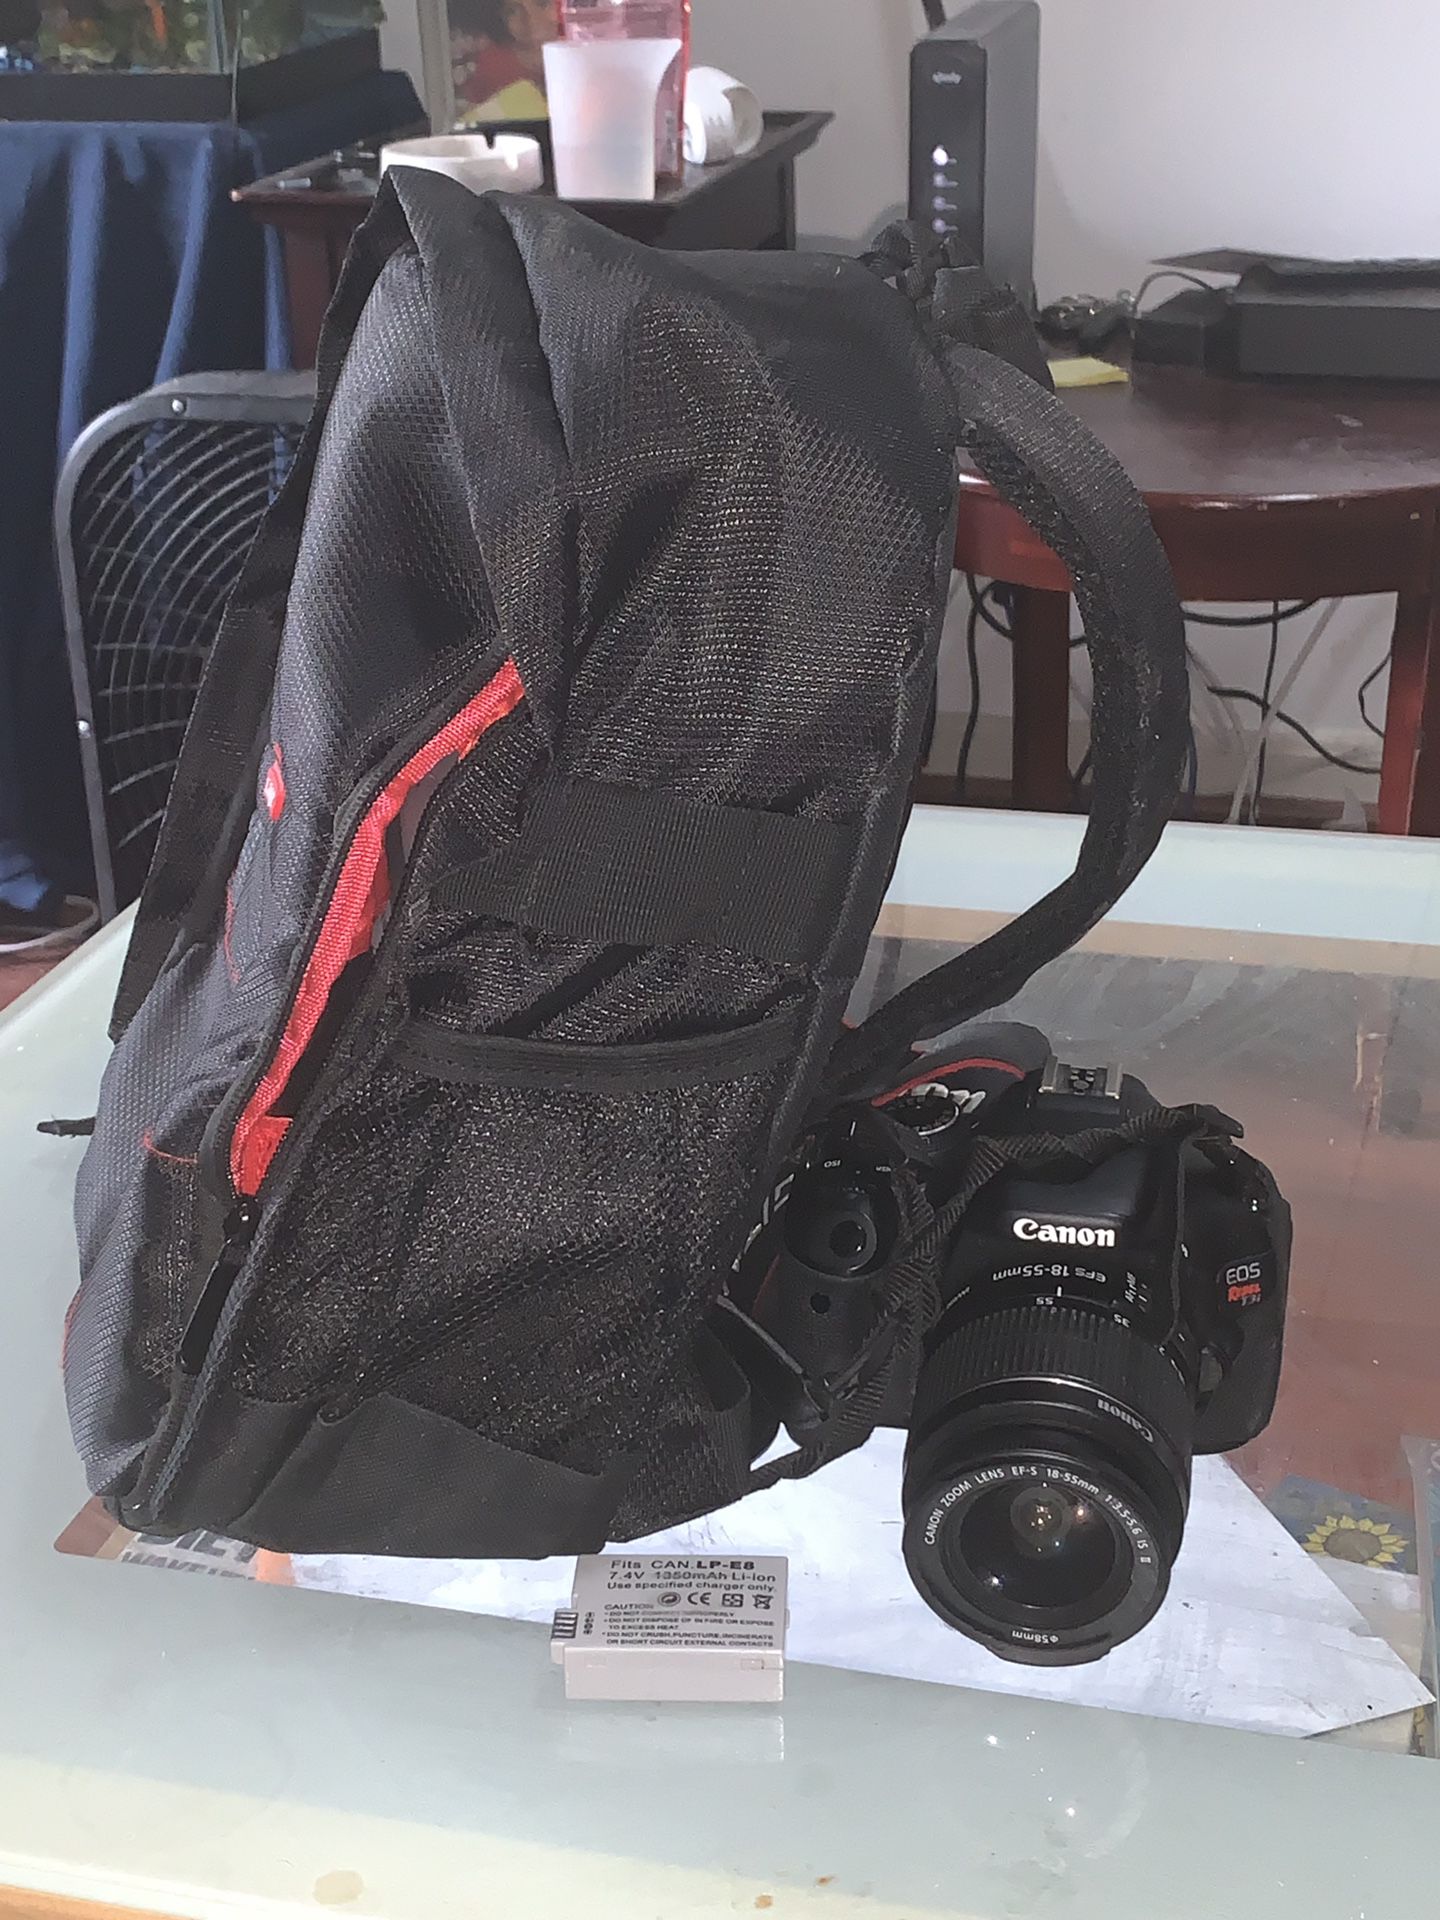 Canon Rebel T3i w/18-55mm lens, camera bag & 2 batteries